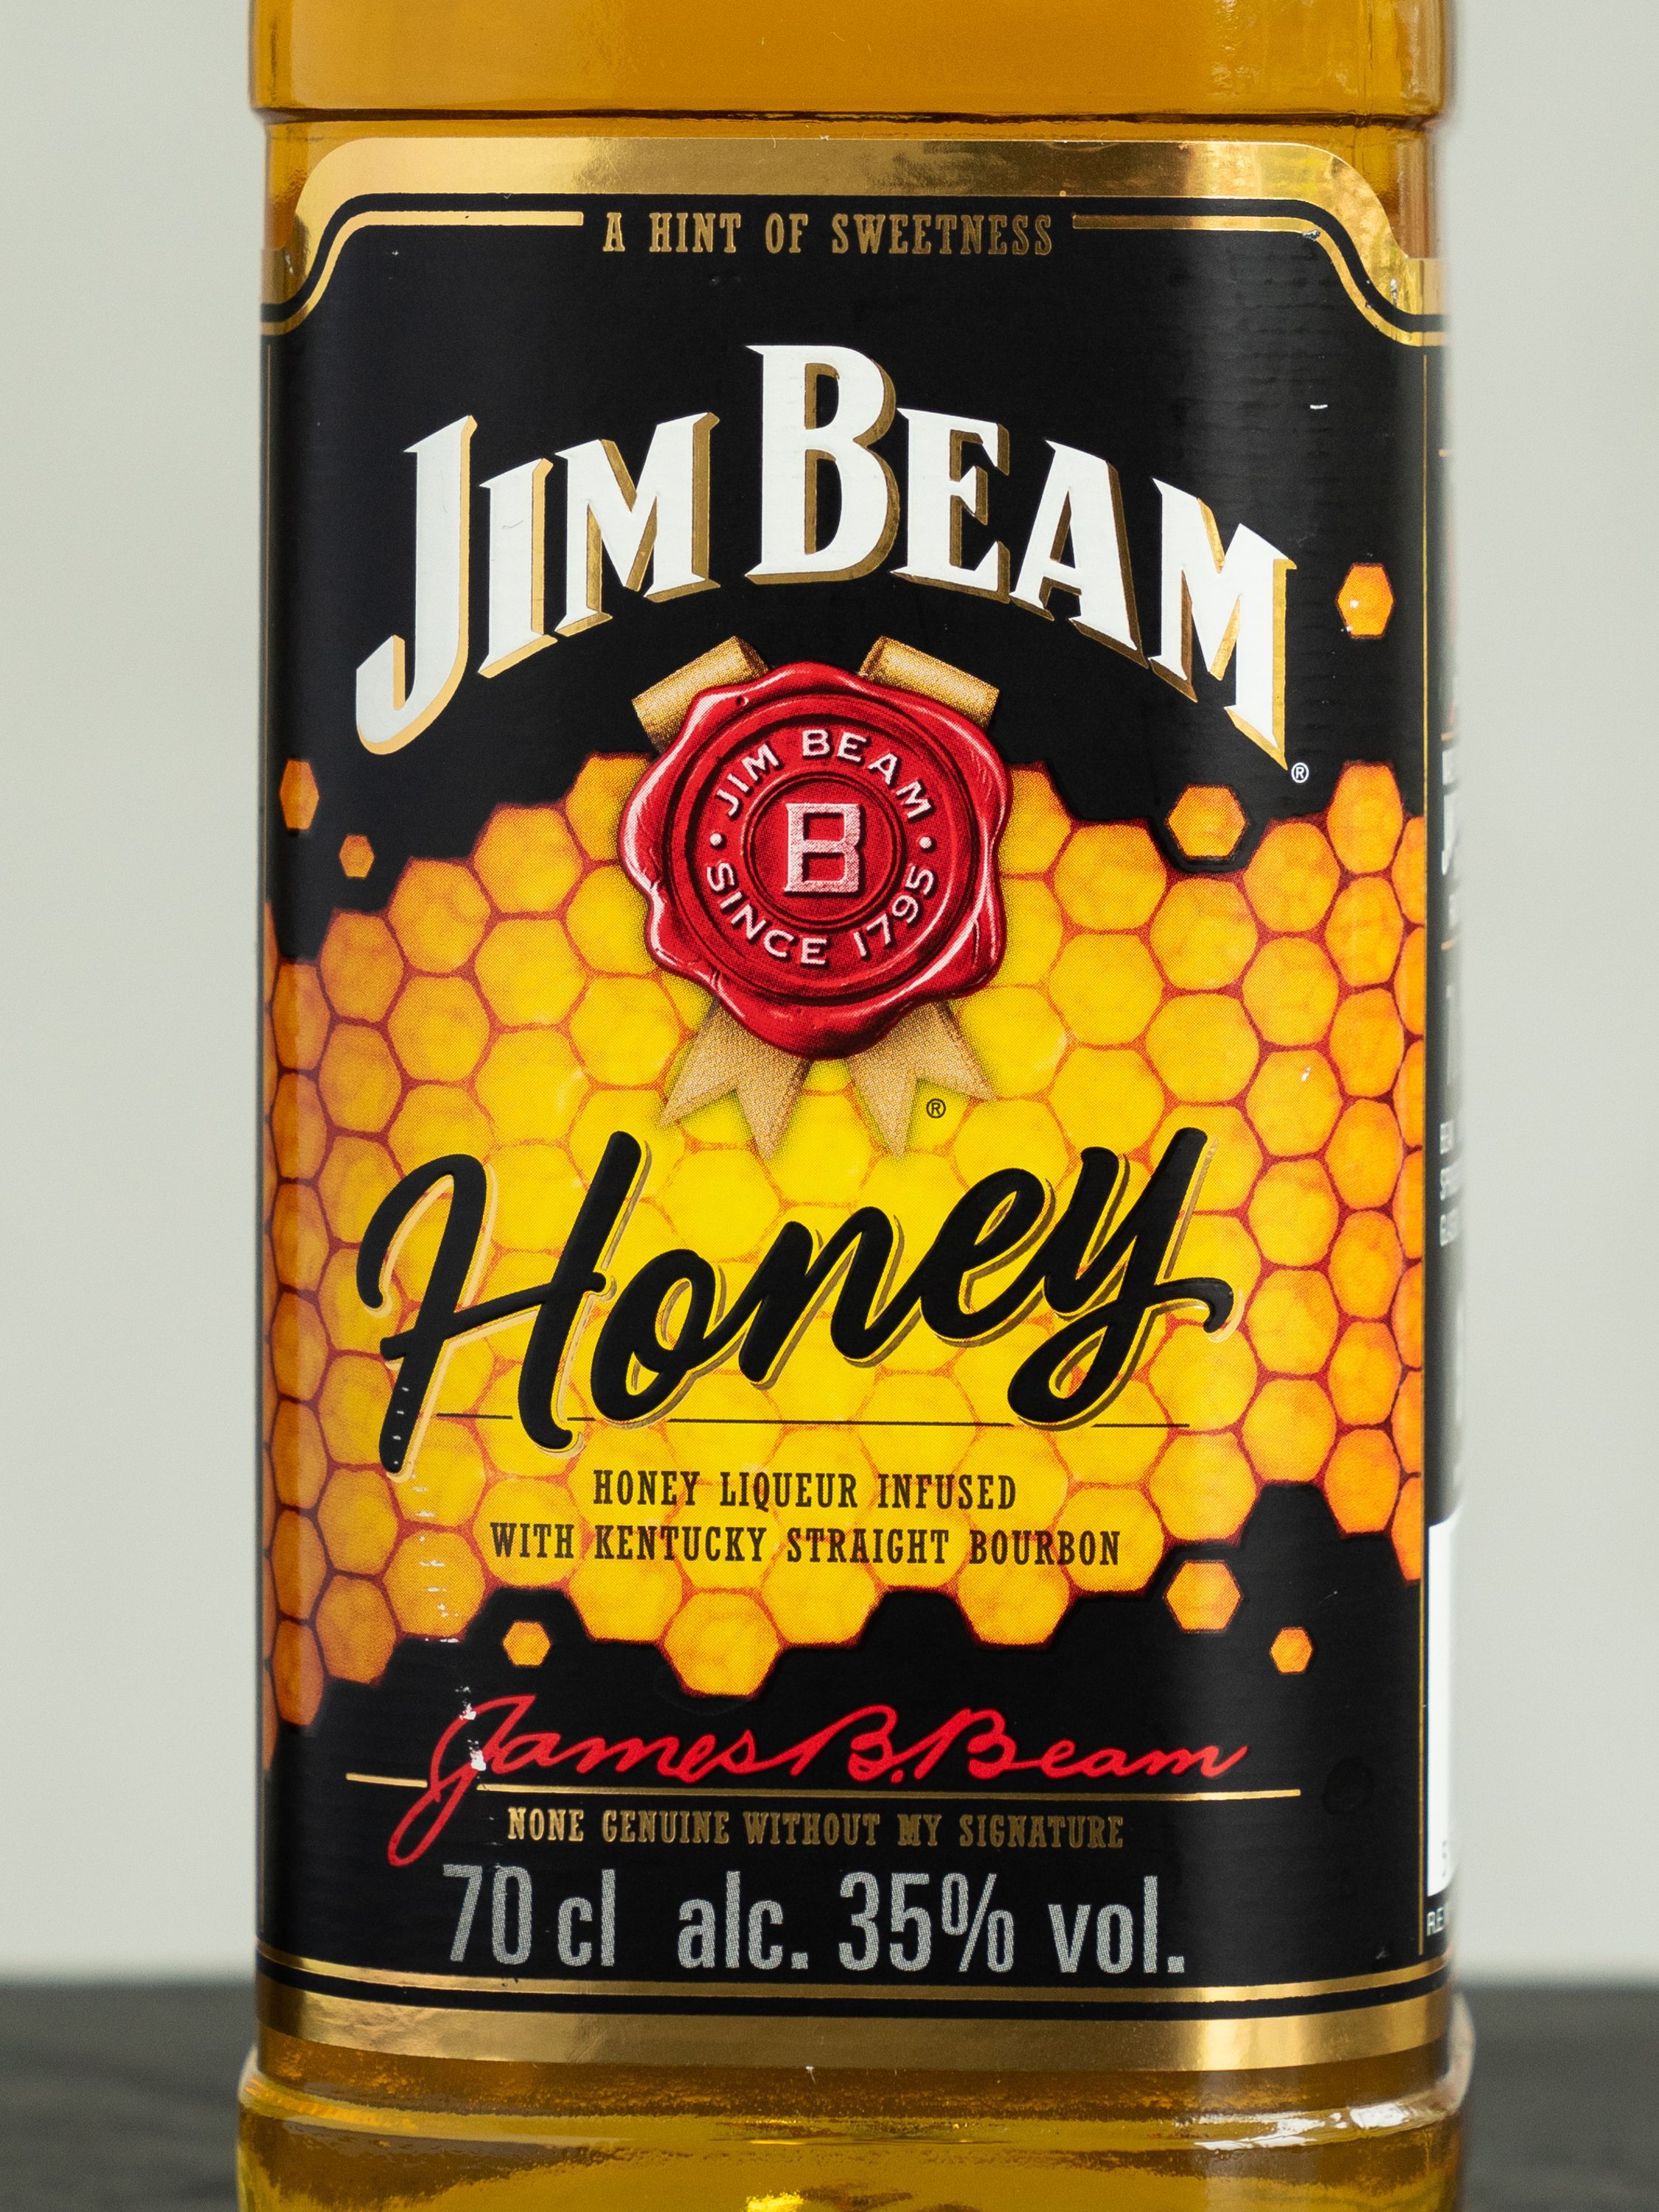 Виски Jim Beam Honey bourbon/ Джим Бим Хани бурбон